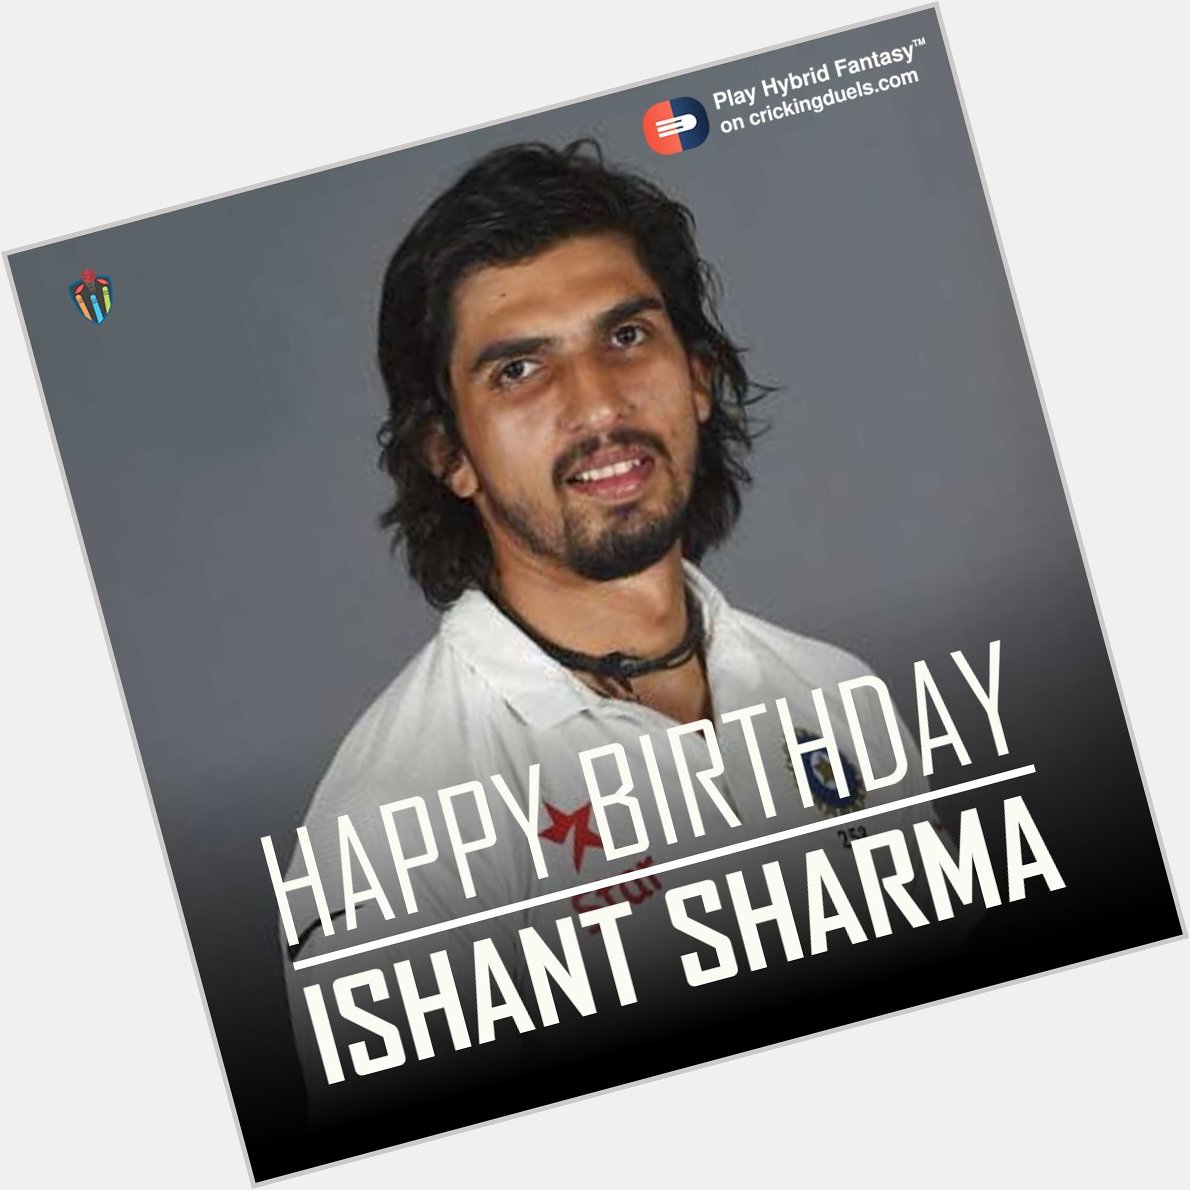 Happy Birthday, Ishant Sharma. The Indian cricketer turns 29 today. 